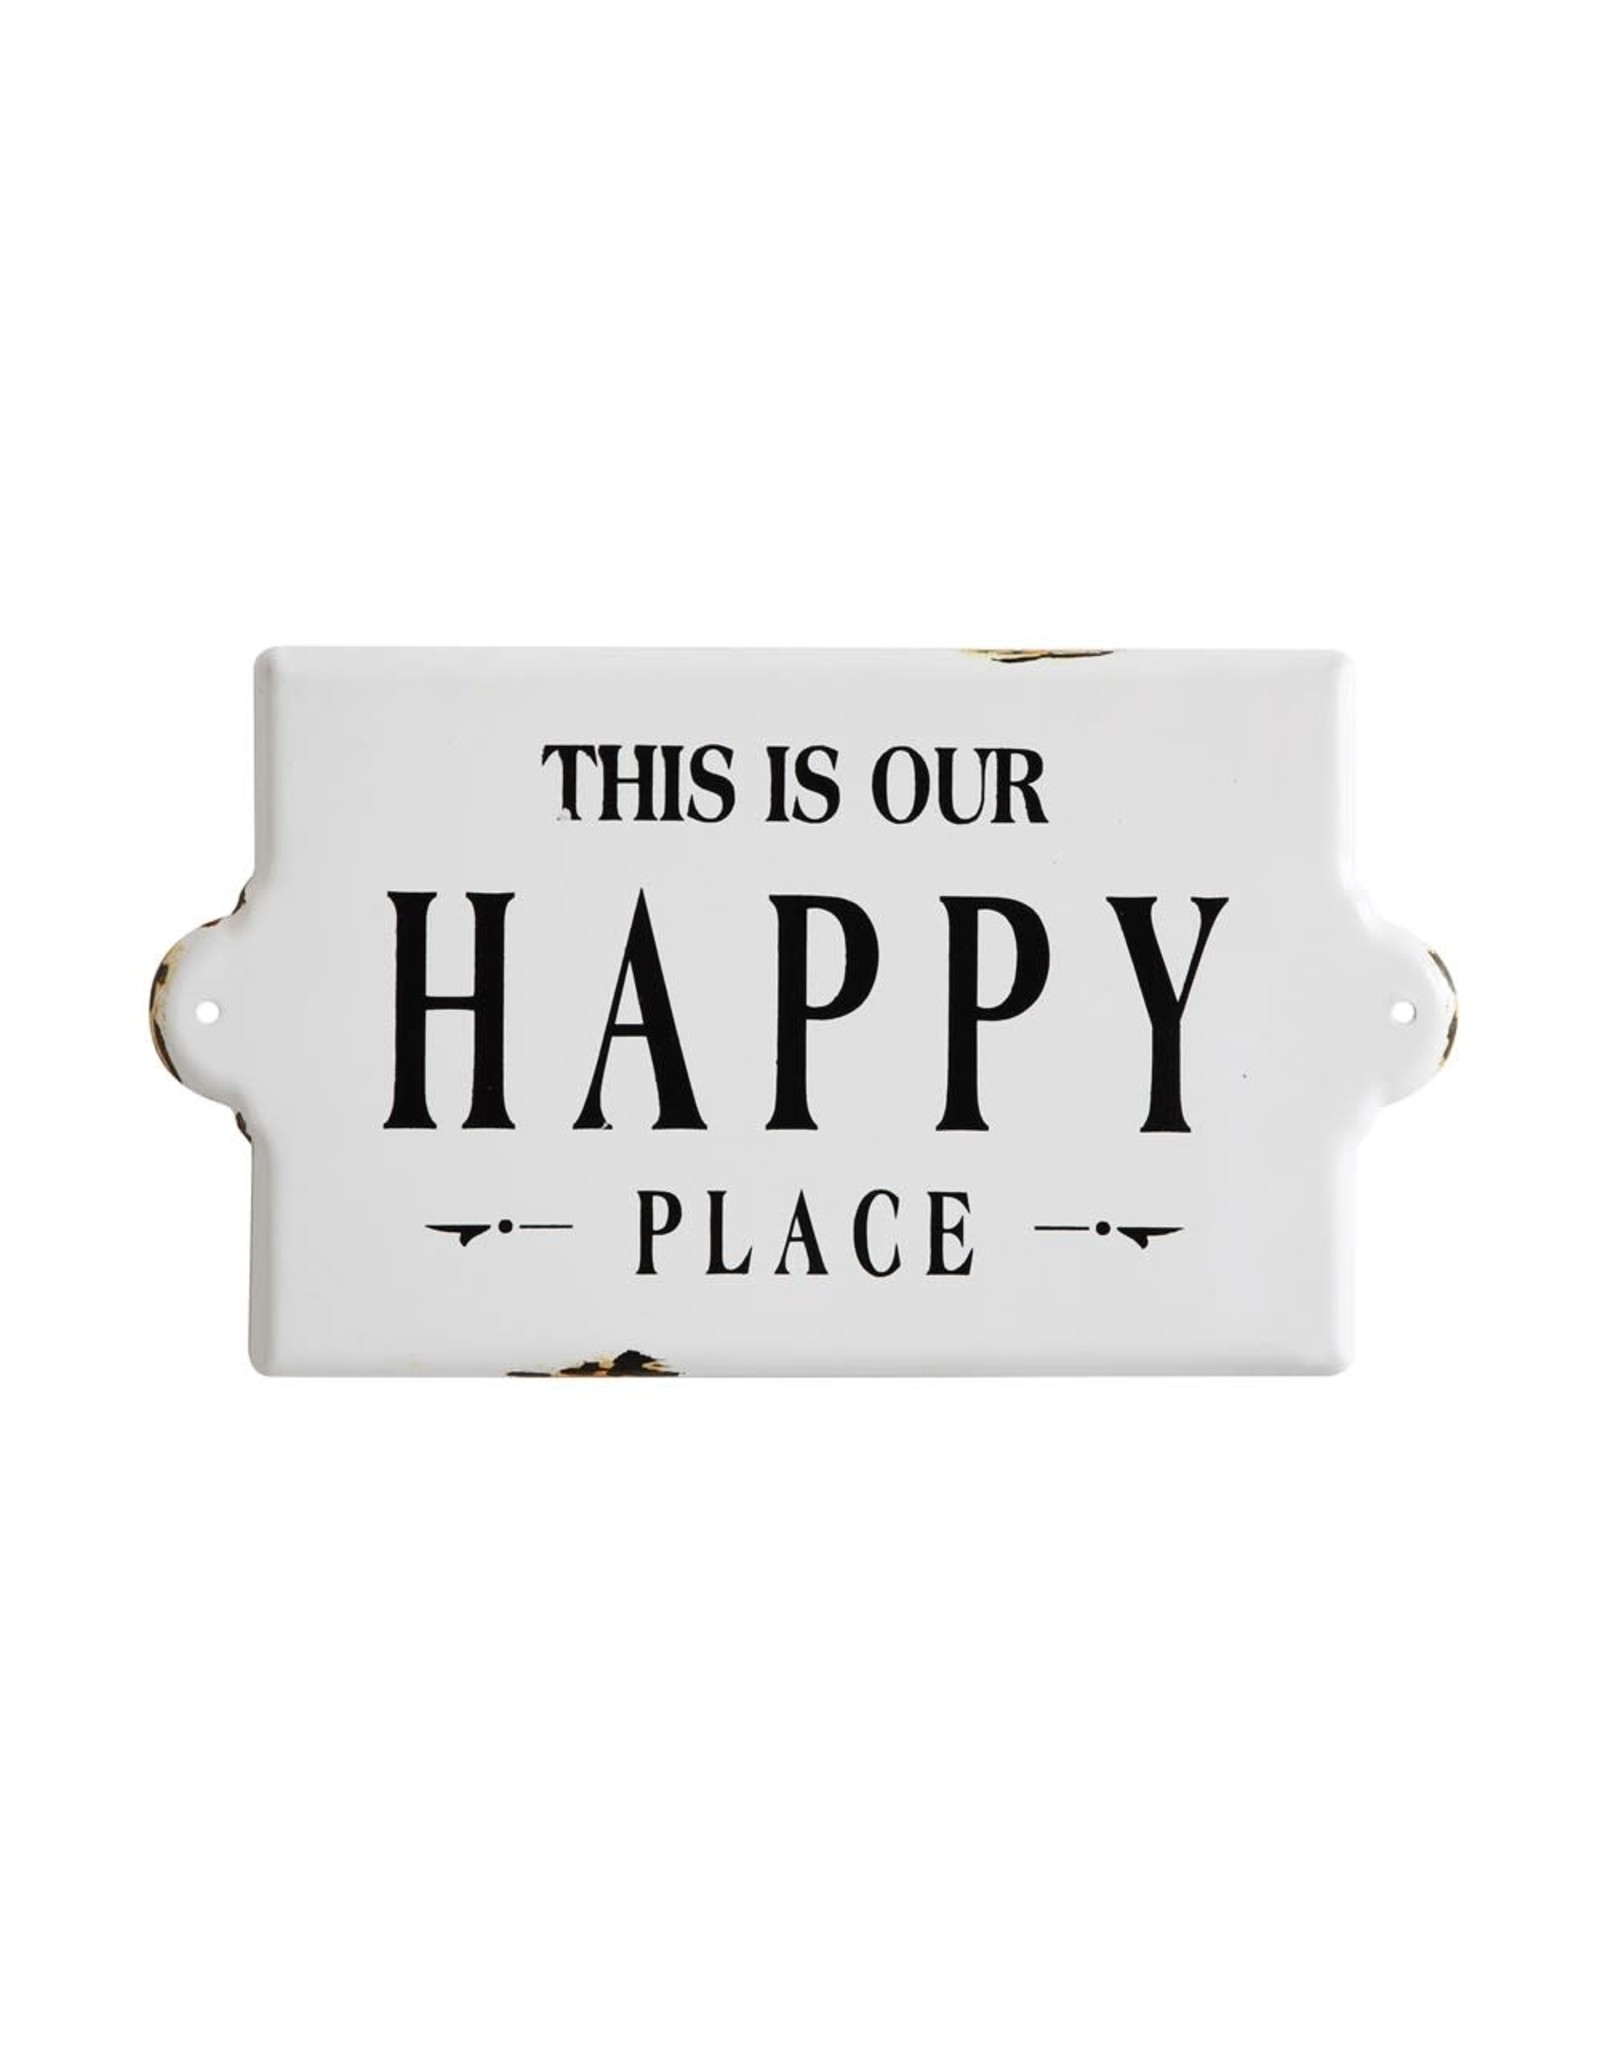 Happy Place Enamel Sign